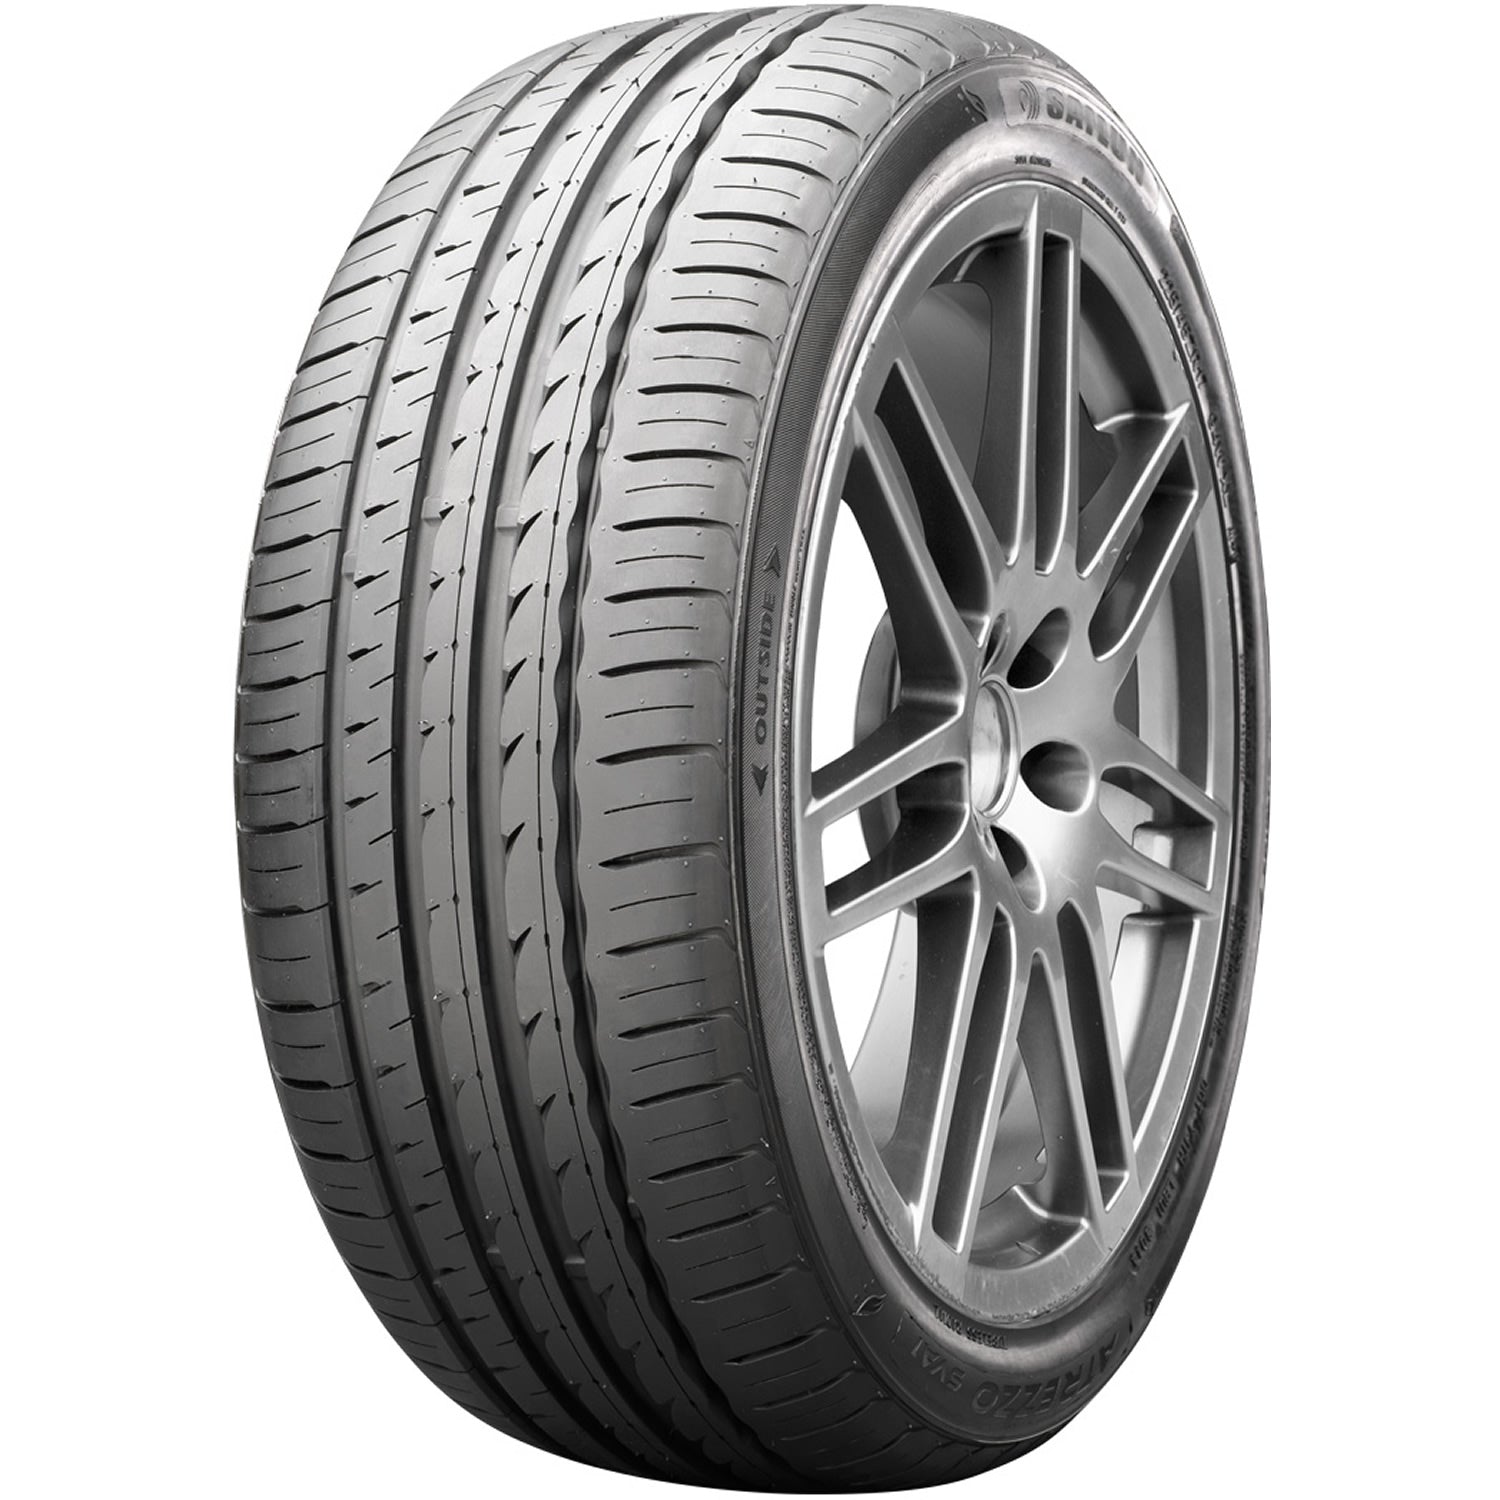 SAILUN ATREZZO SVA1 205/45R17 (24.3X8.1R 17) Tires